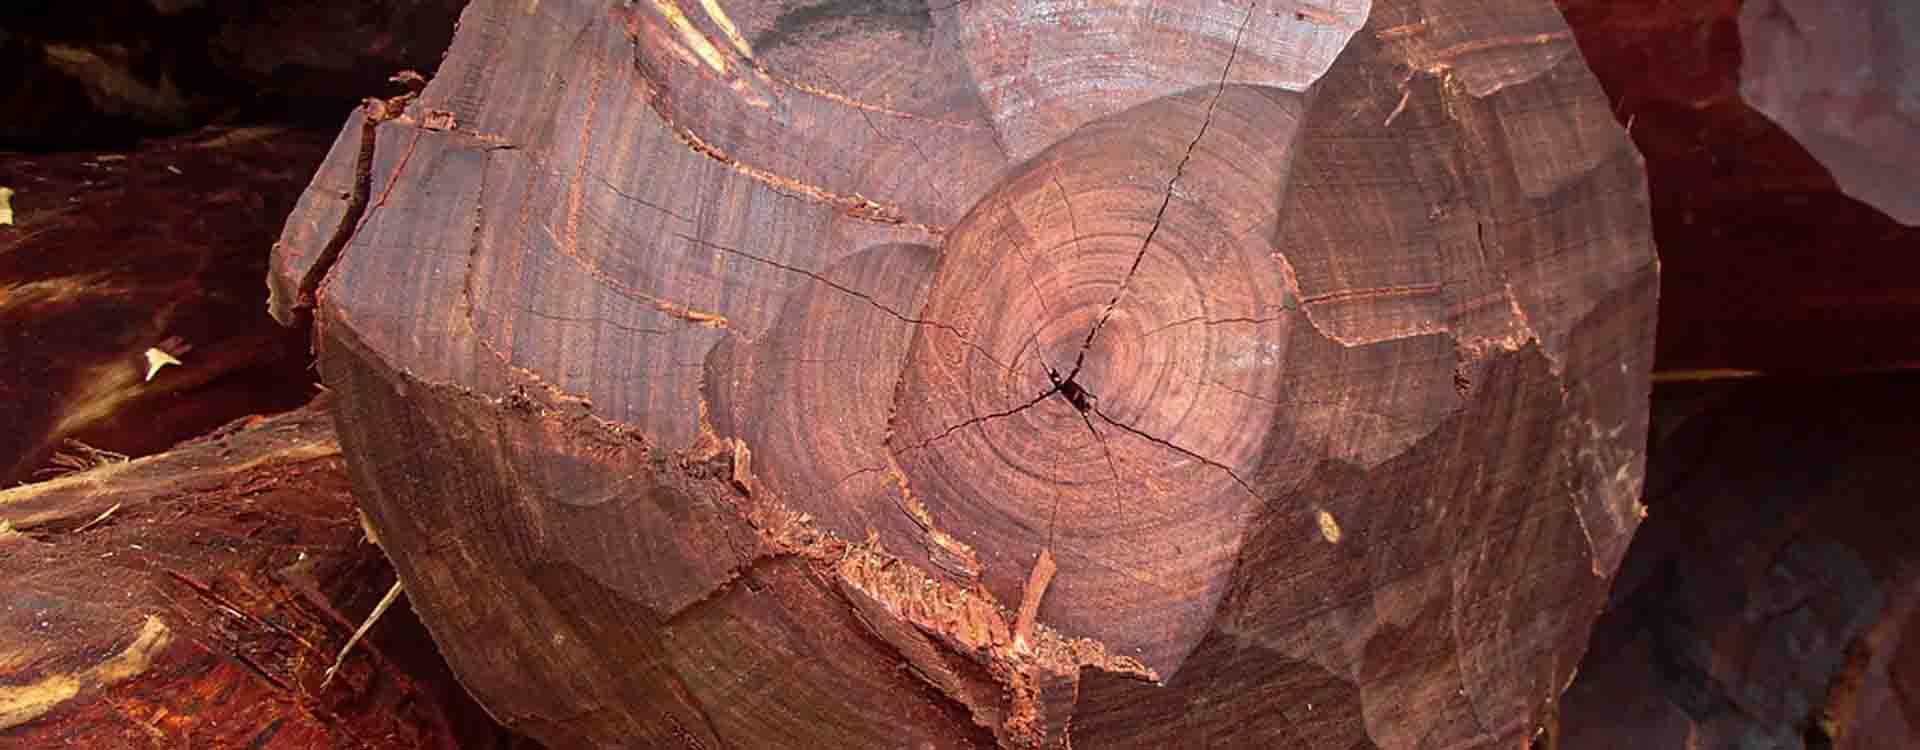 Nespracovaný kus palisandrového dreva